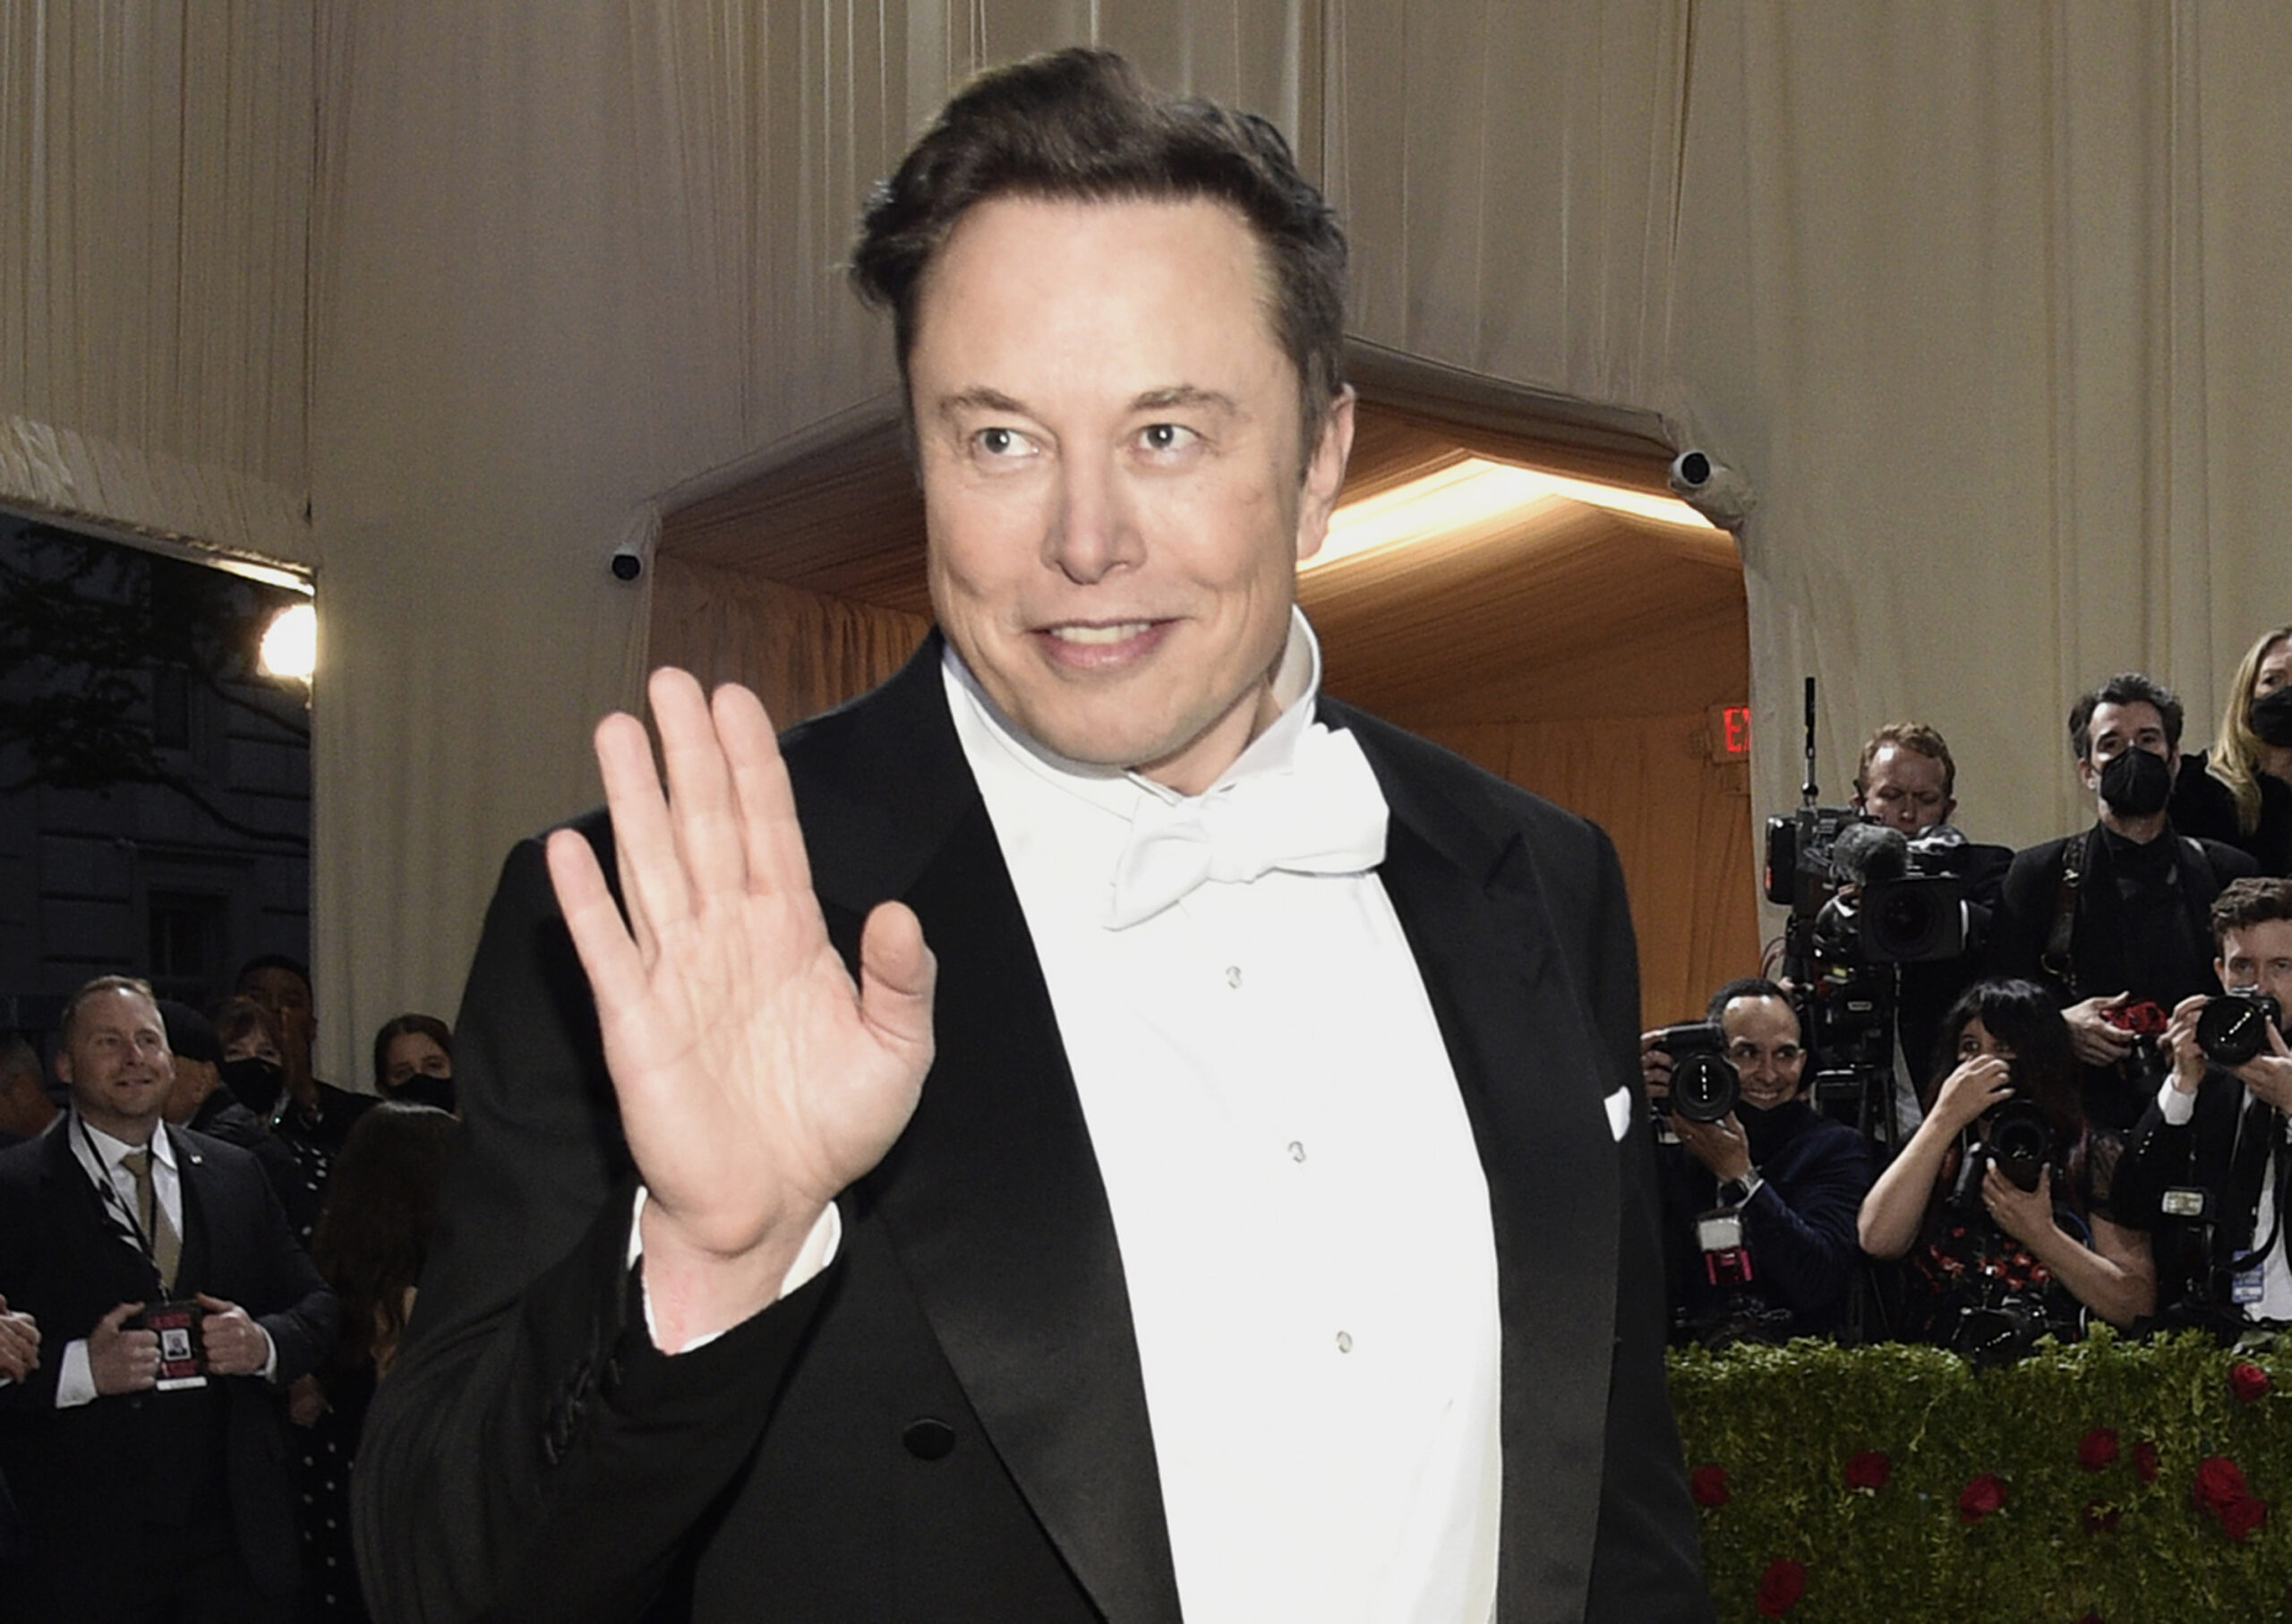 Elon Musk in tuxedo